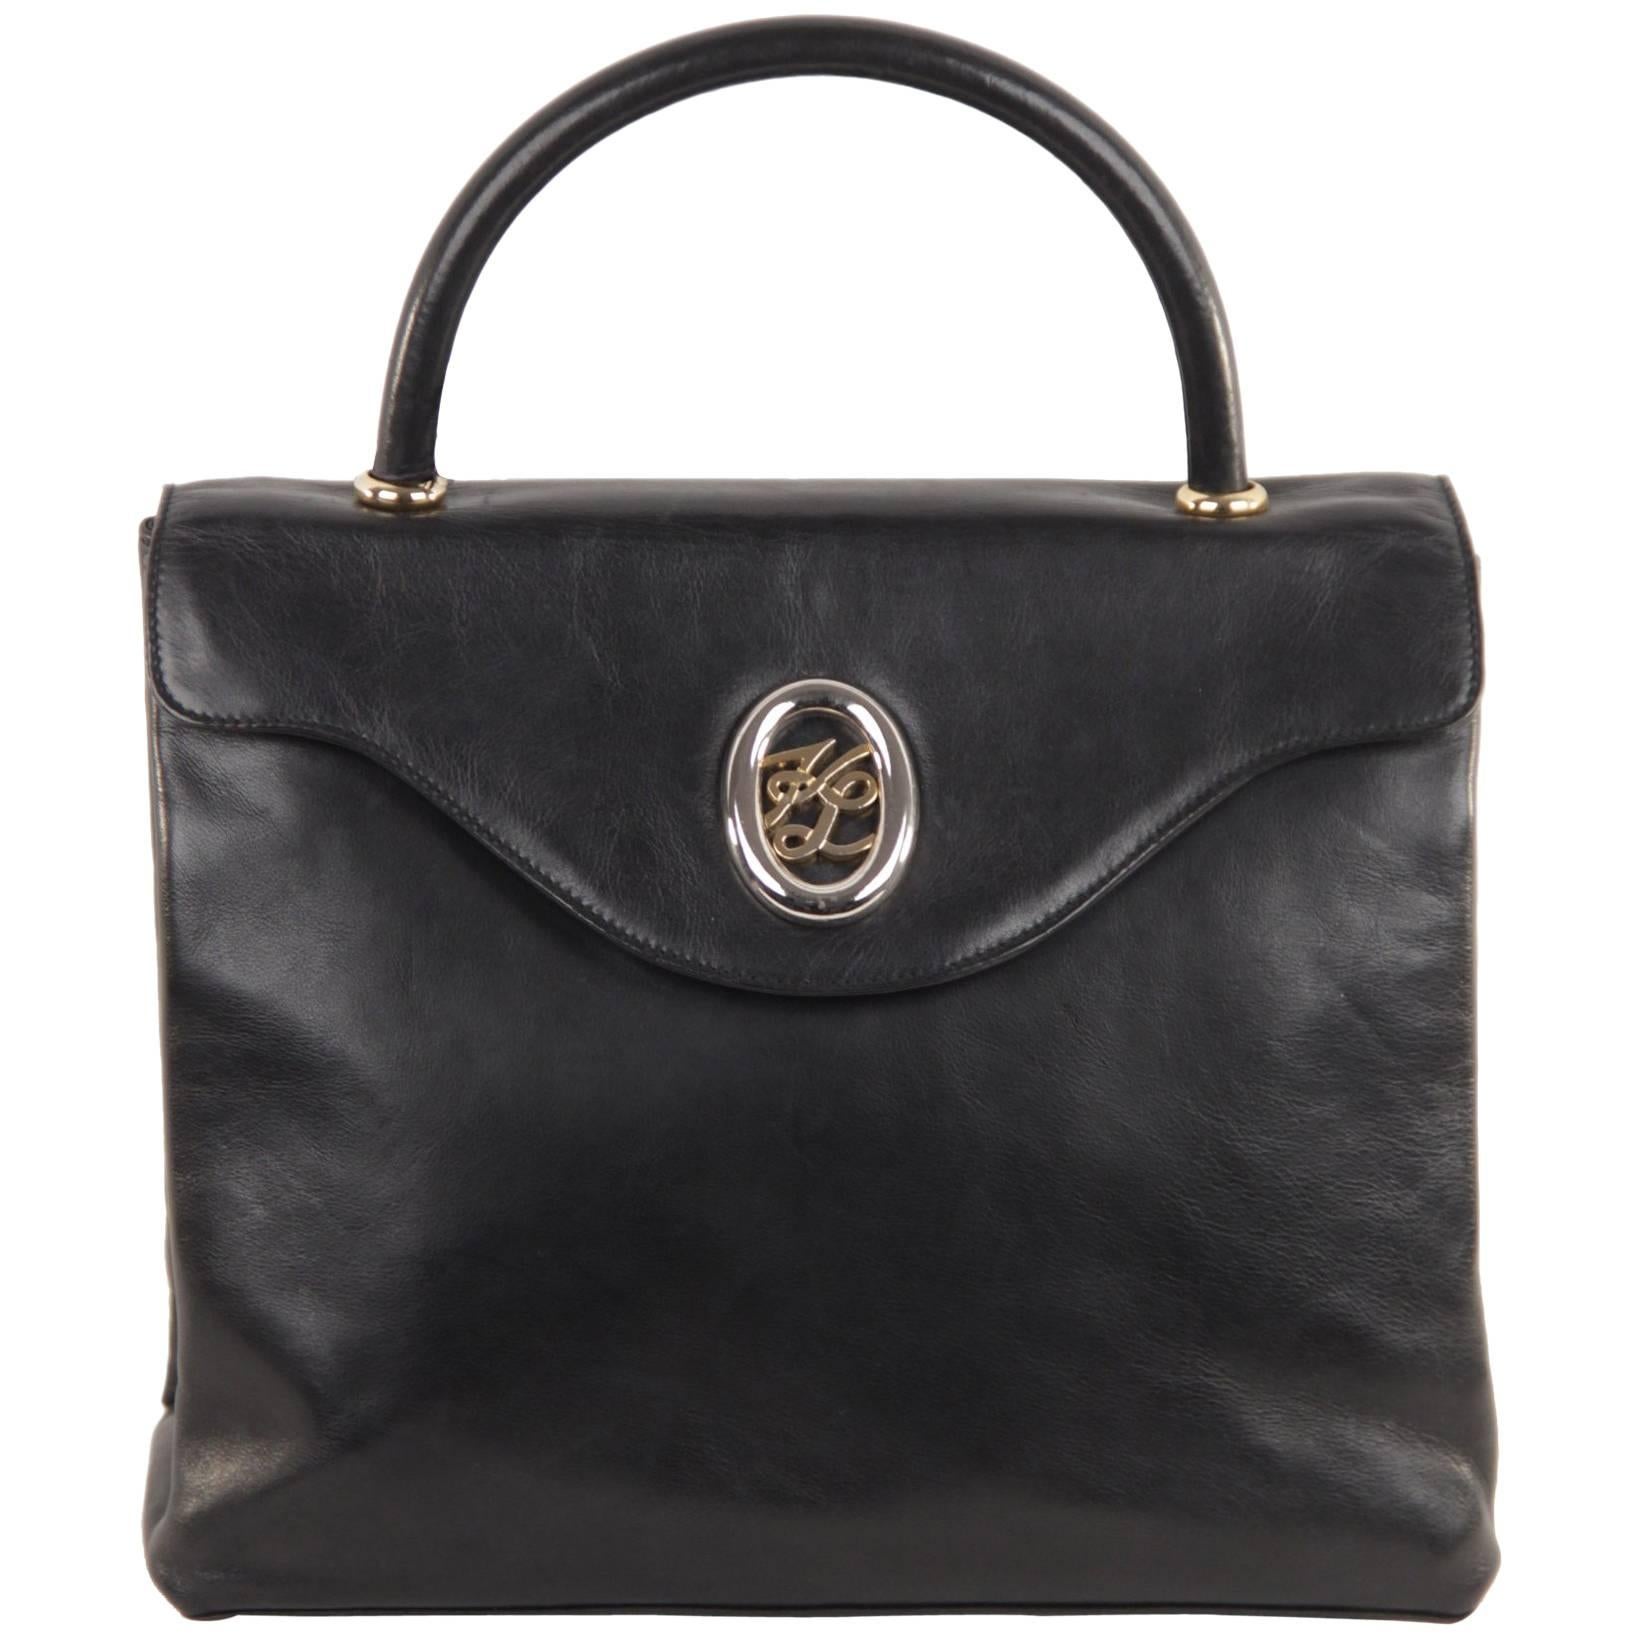 KARL LAGERFELD Black Leather HANDBAG Top Handle Bag FLAP PURSE Satchel